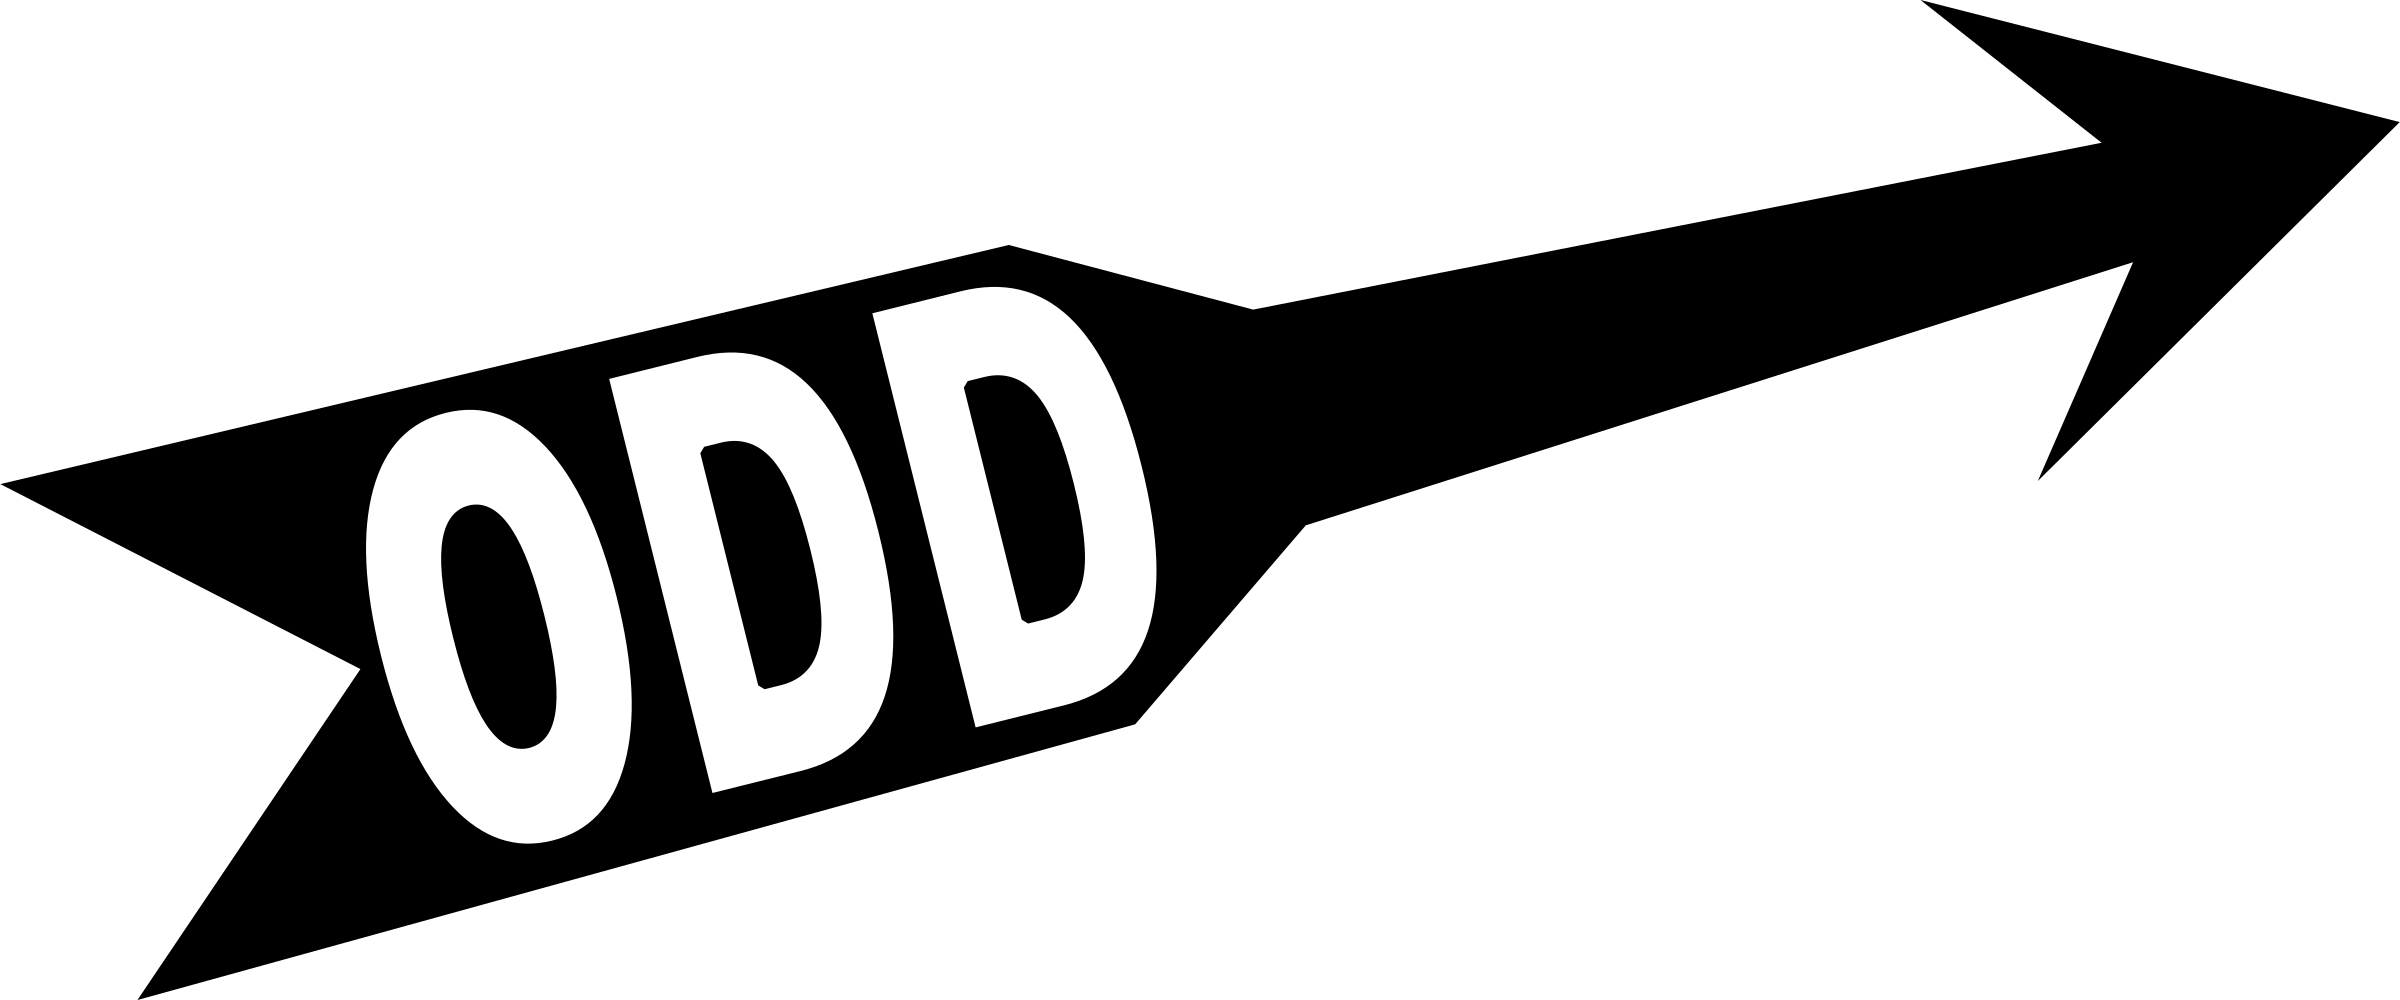 Odd Logo - ODD Logo PNG Transparent & SVG Vector - Freebie Supply